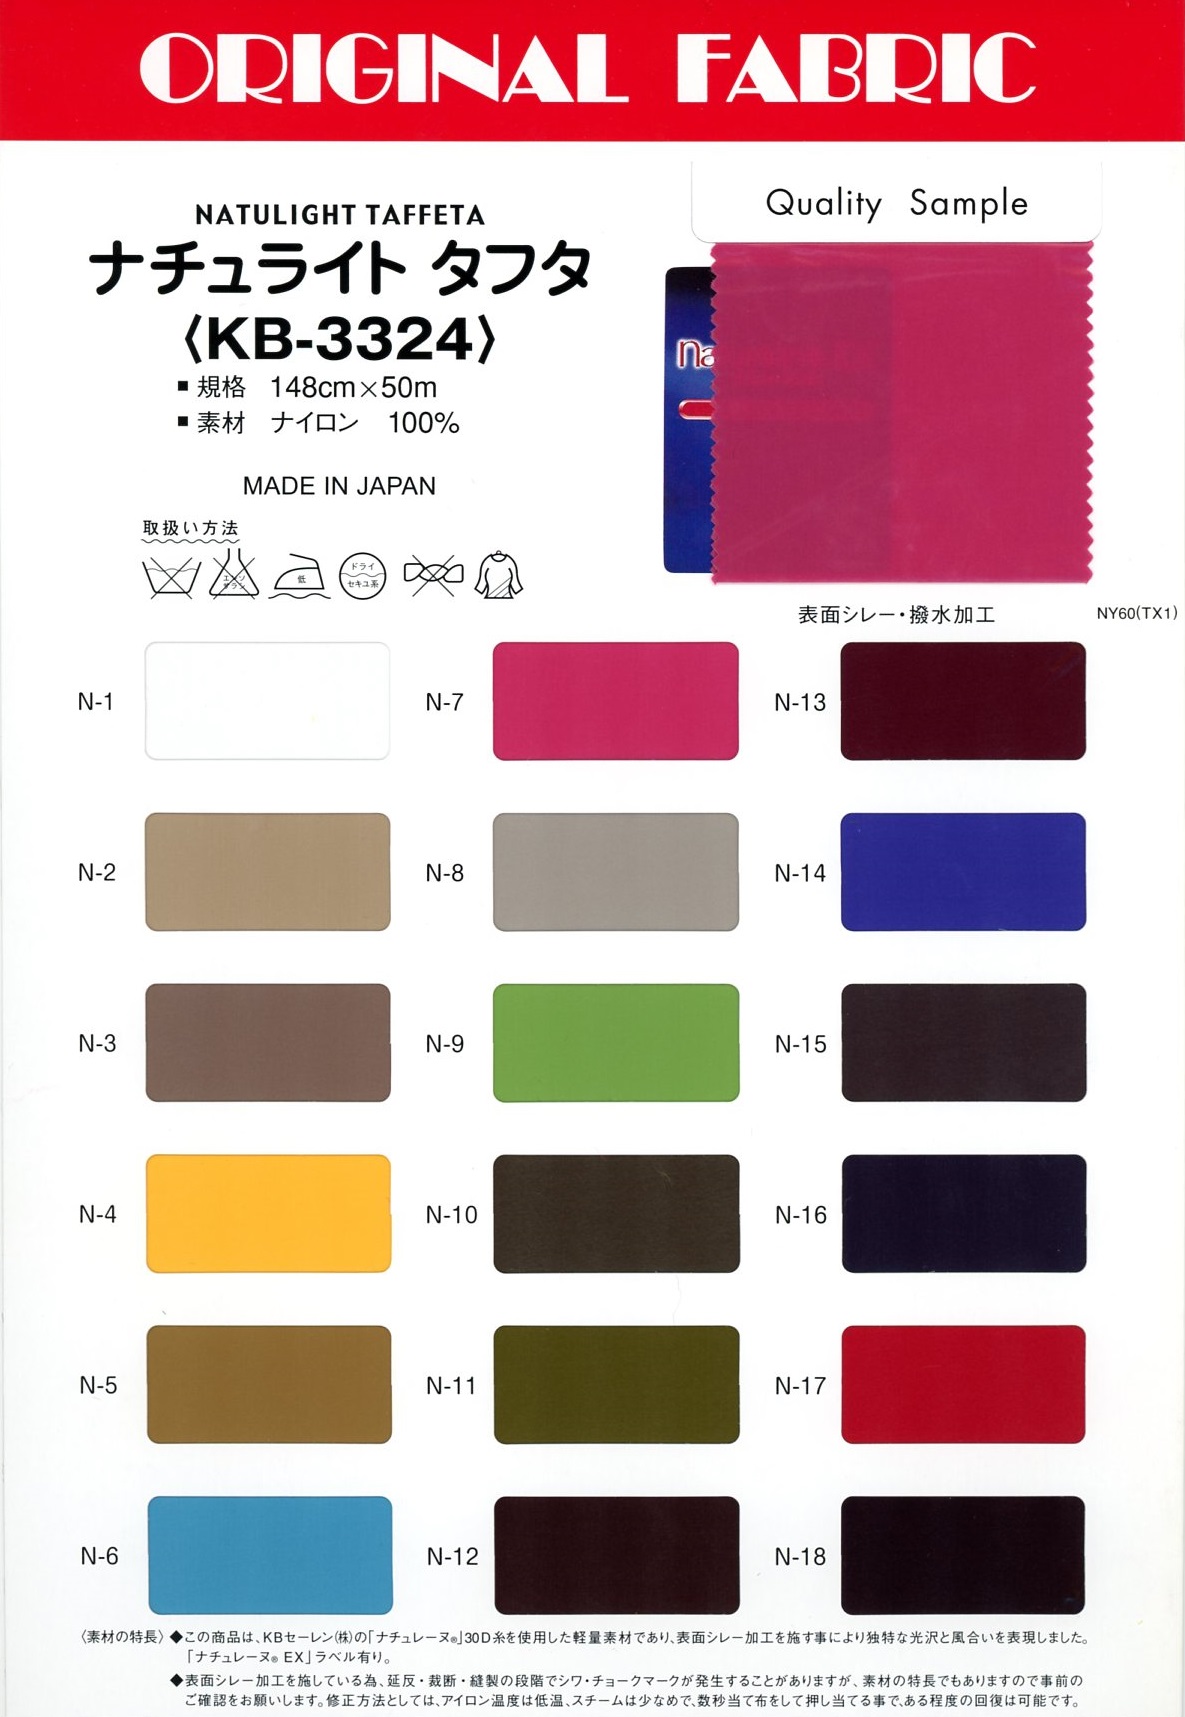 KB-3324 Naturite Taffeta[Fabrica Textil] Masuda